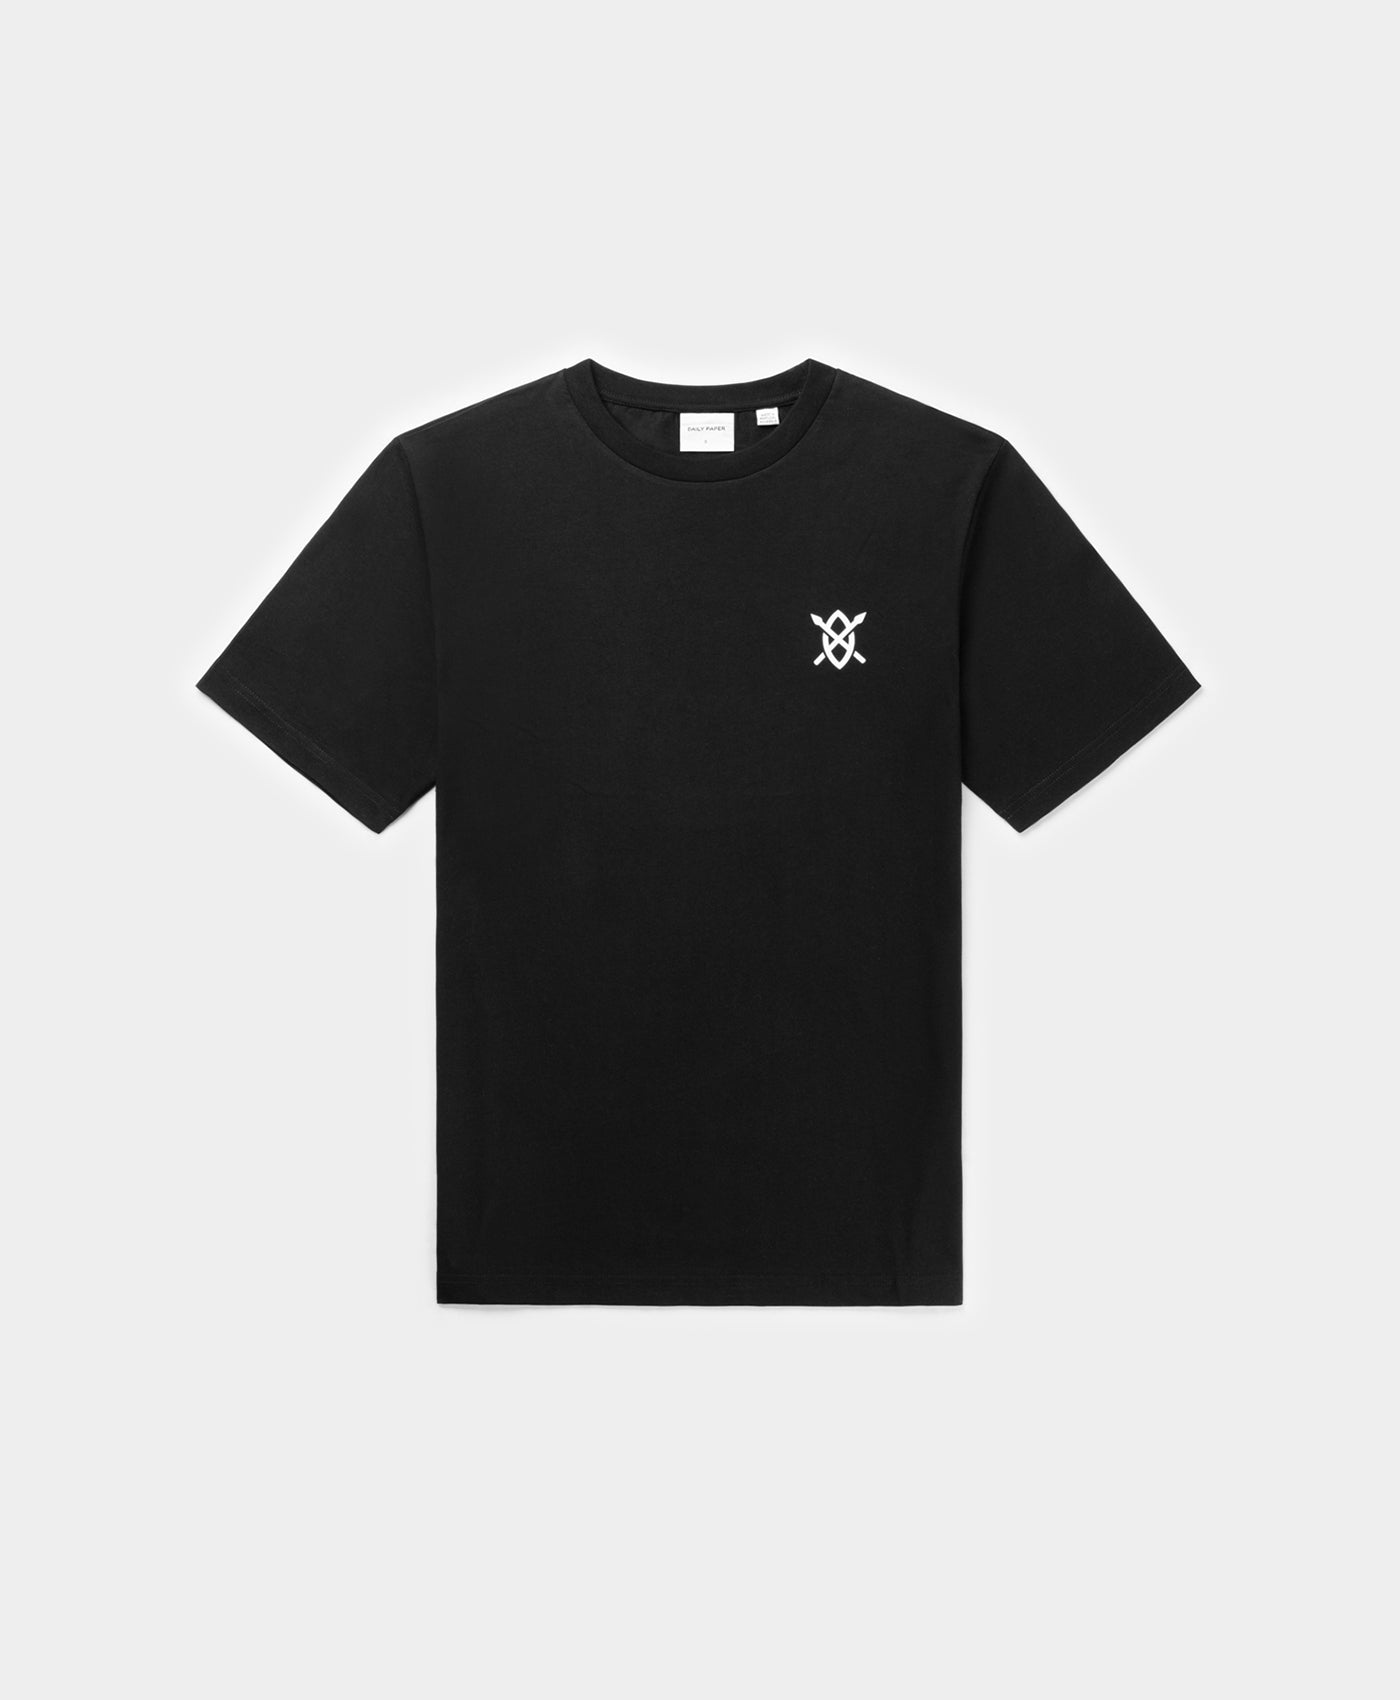 DP - Black White London Flagship Store T-Shirt - Packshot - Rear